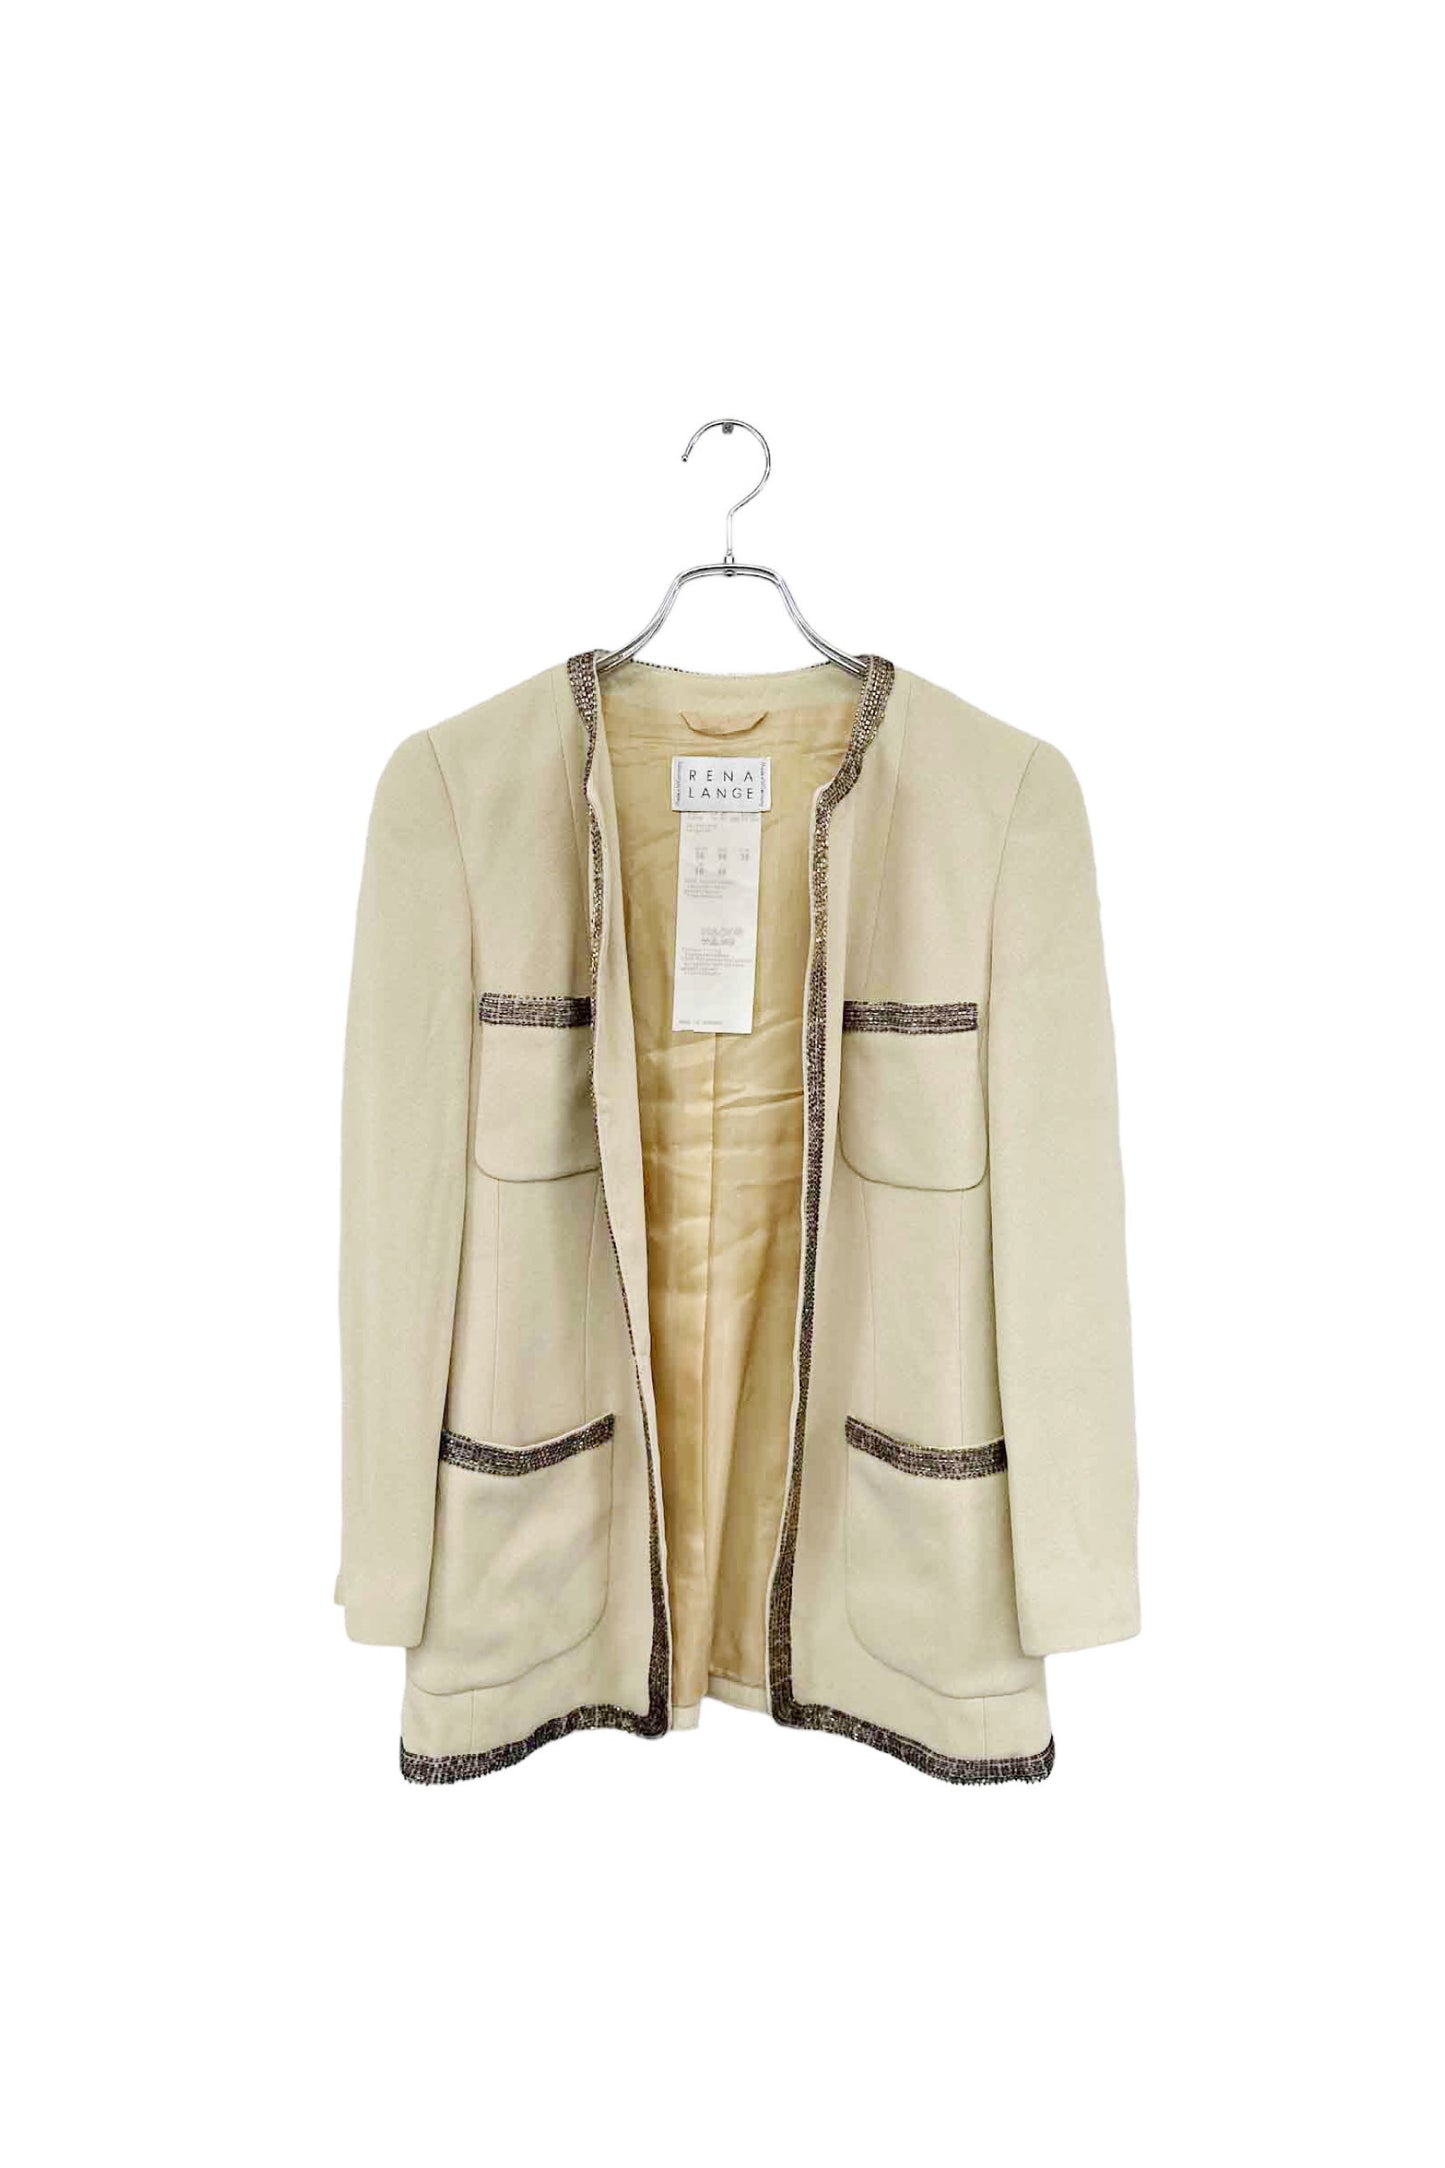 Made in W.Germany RENA LANGE jacket & tops set – ReSCOUNT STORE